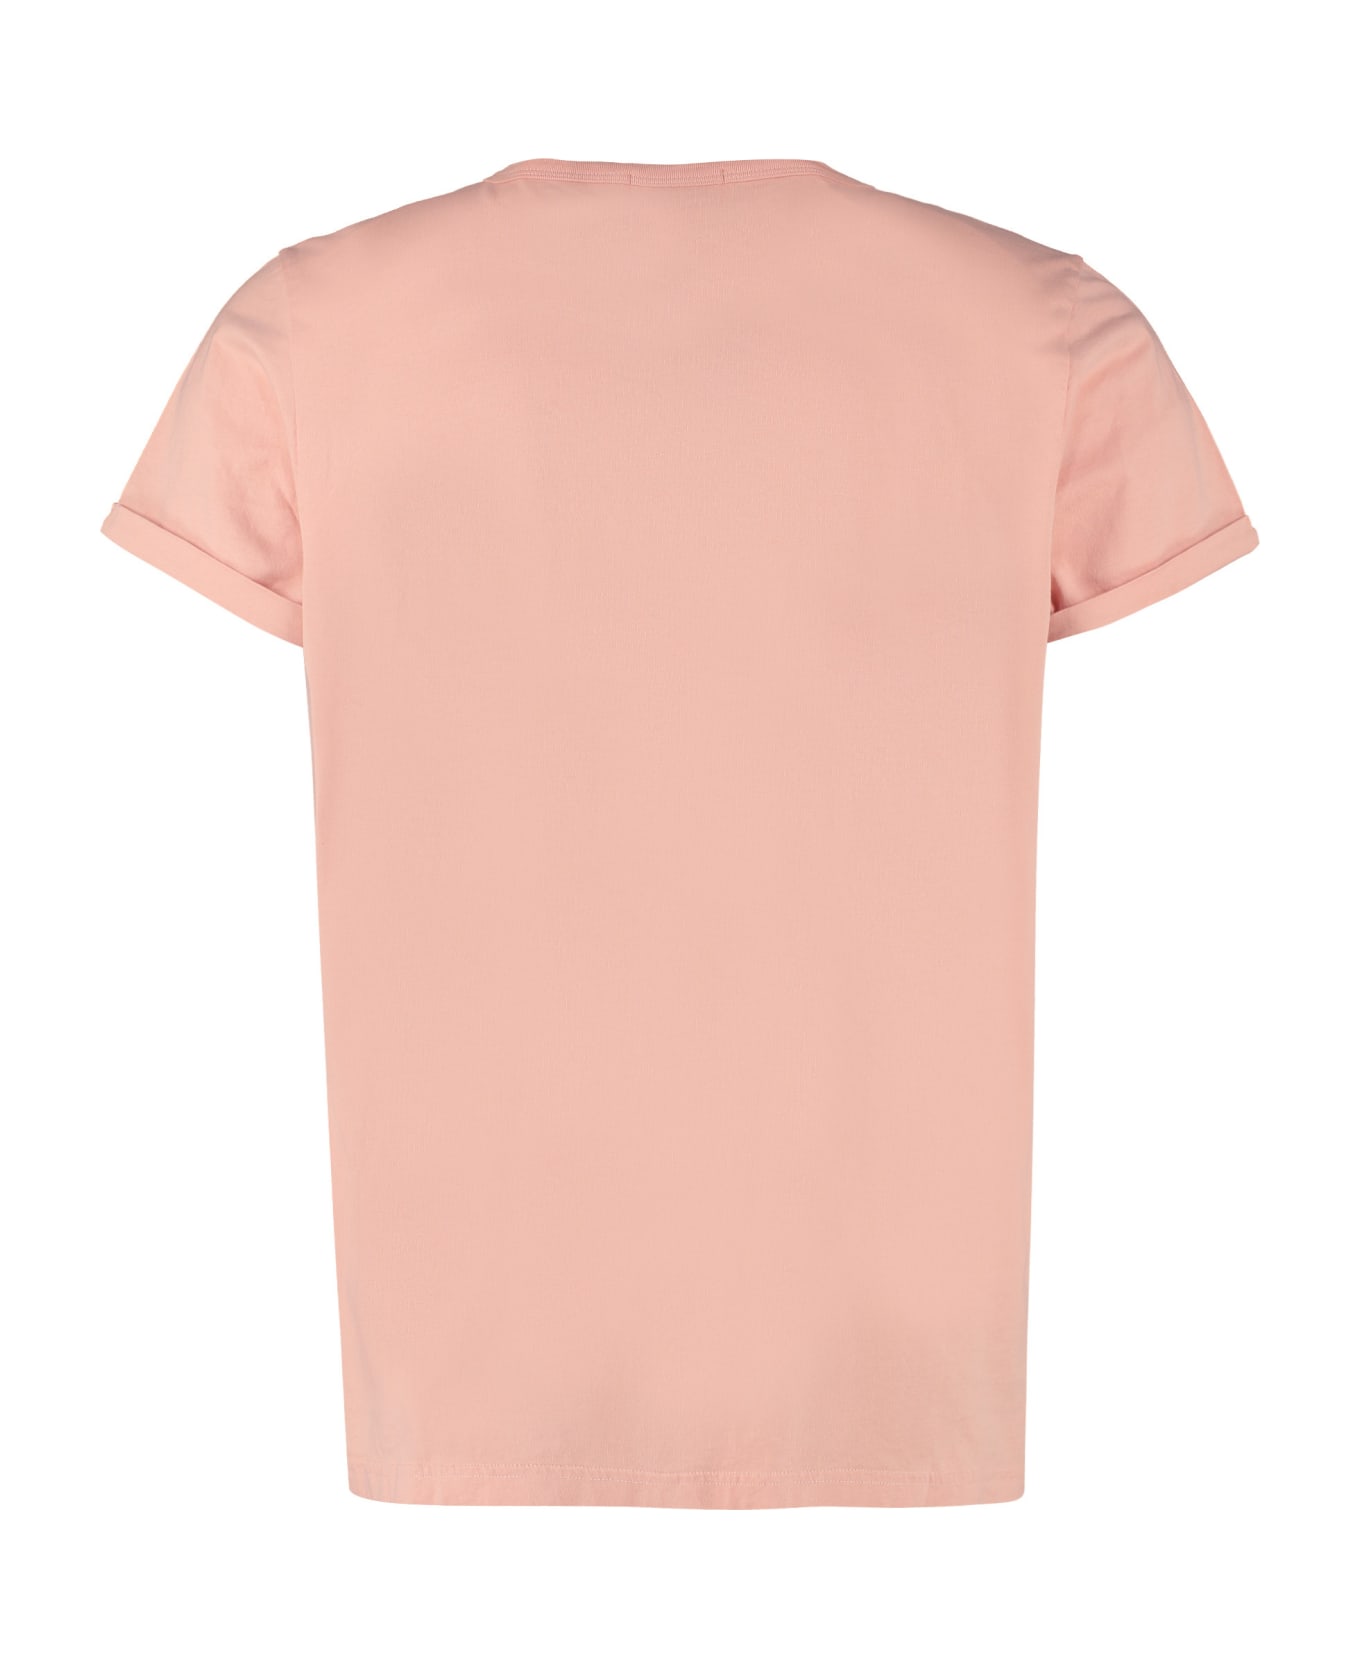 Maison Labiche Embroidered Cotton T-shirt - Salmon pink